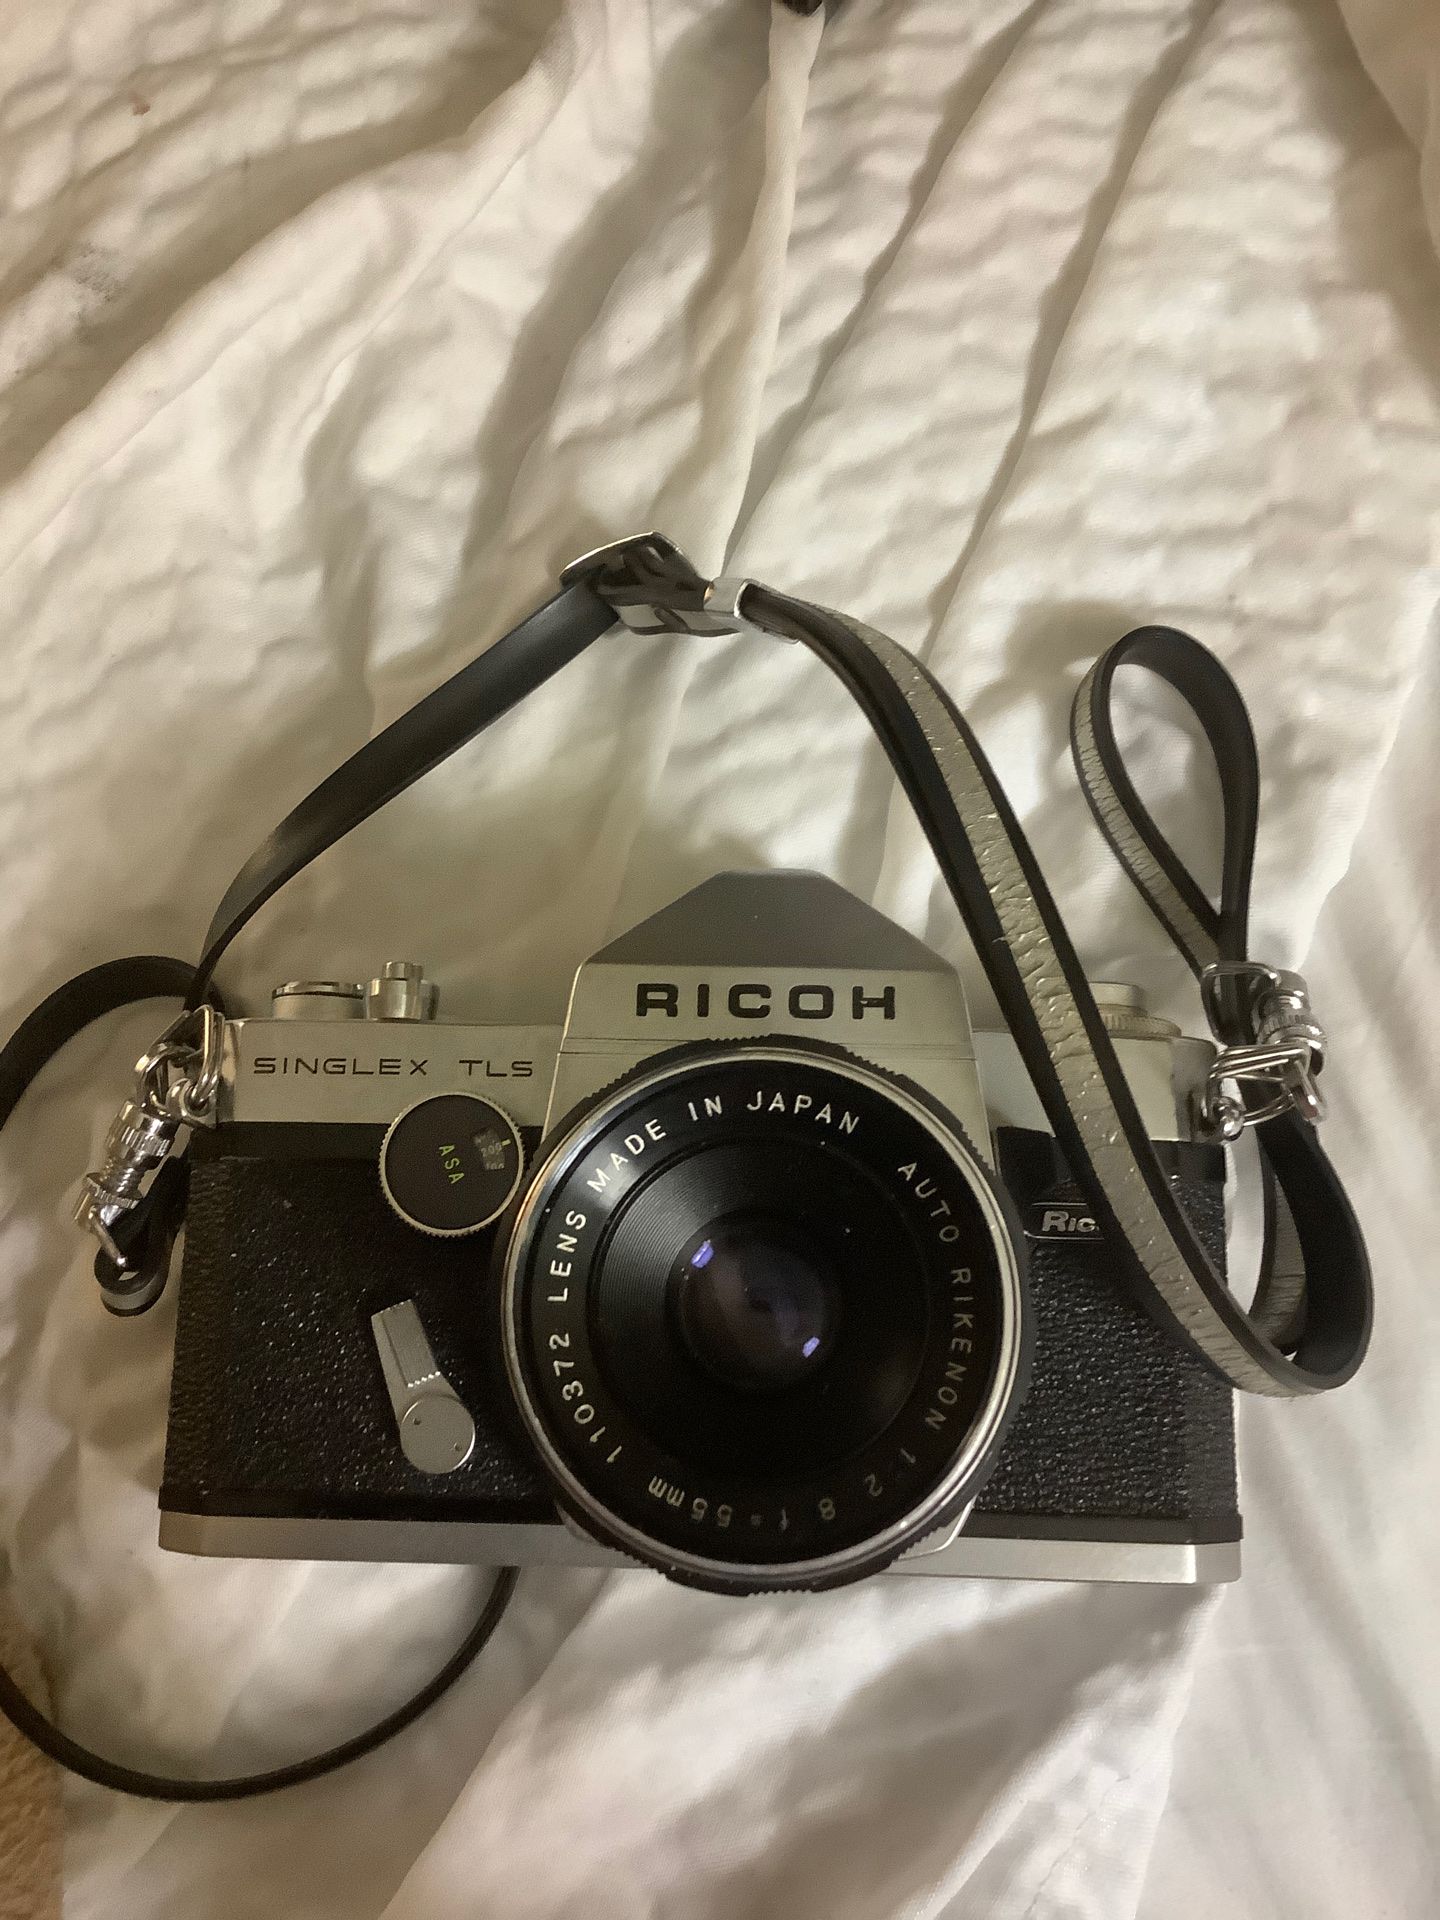 Ricoh TLS singlex camera with Minolta flash bag included